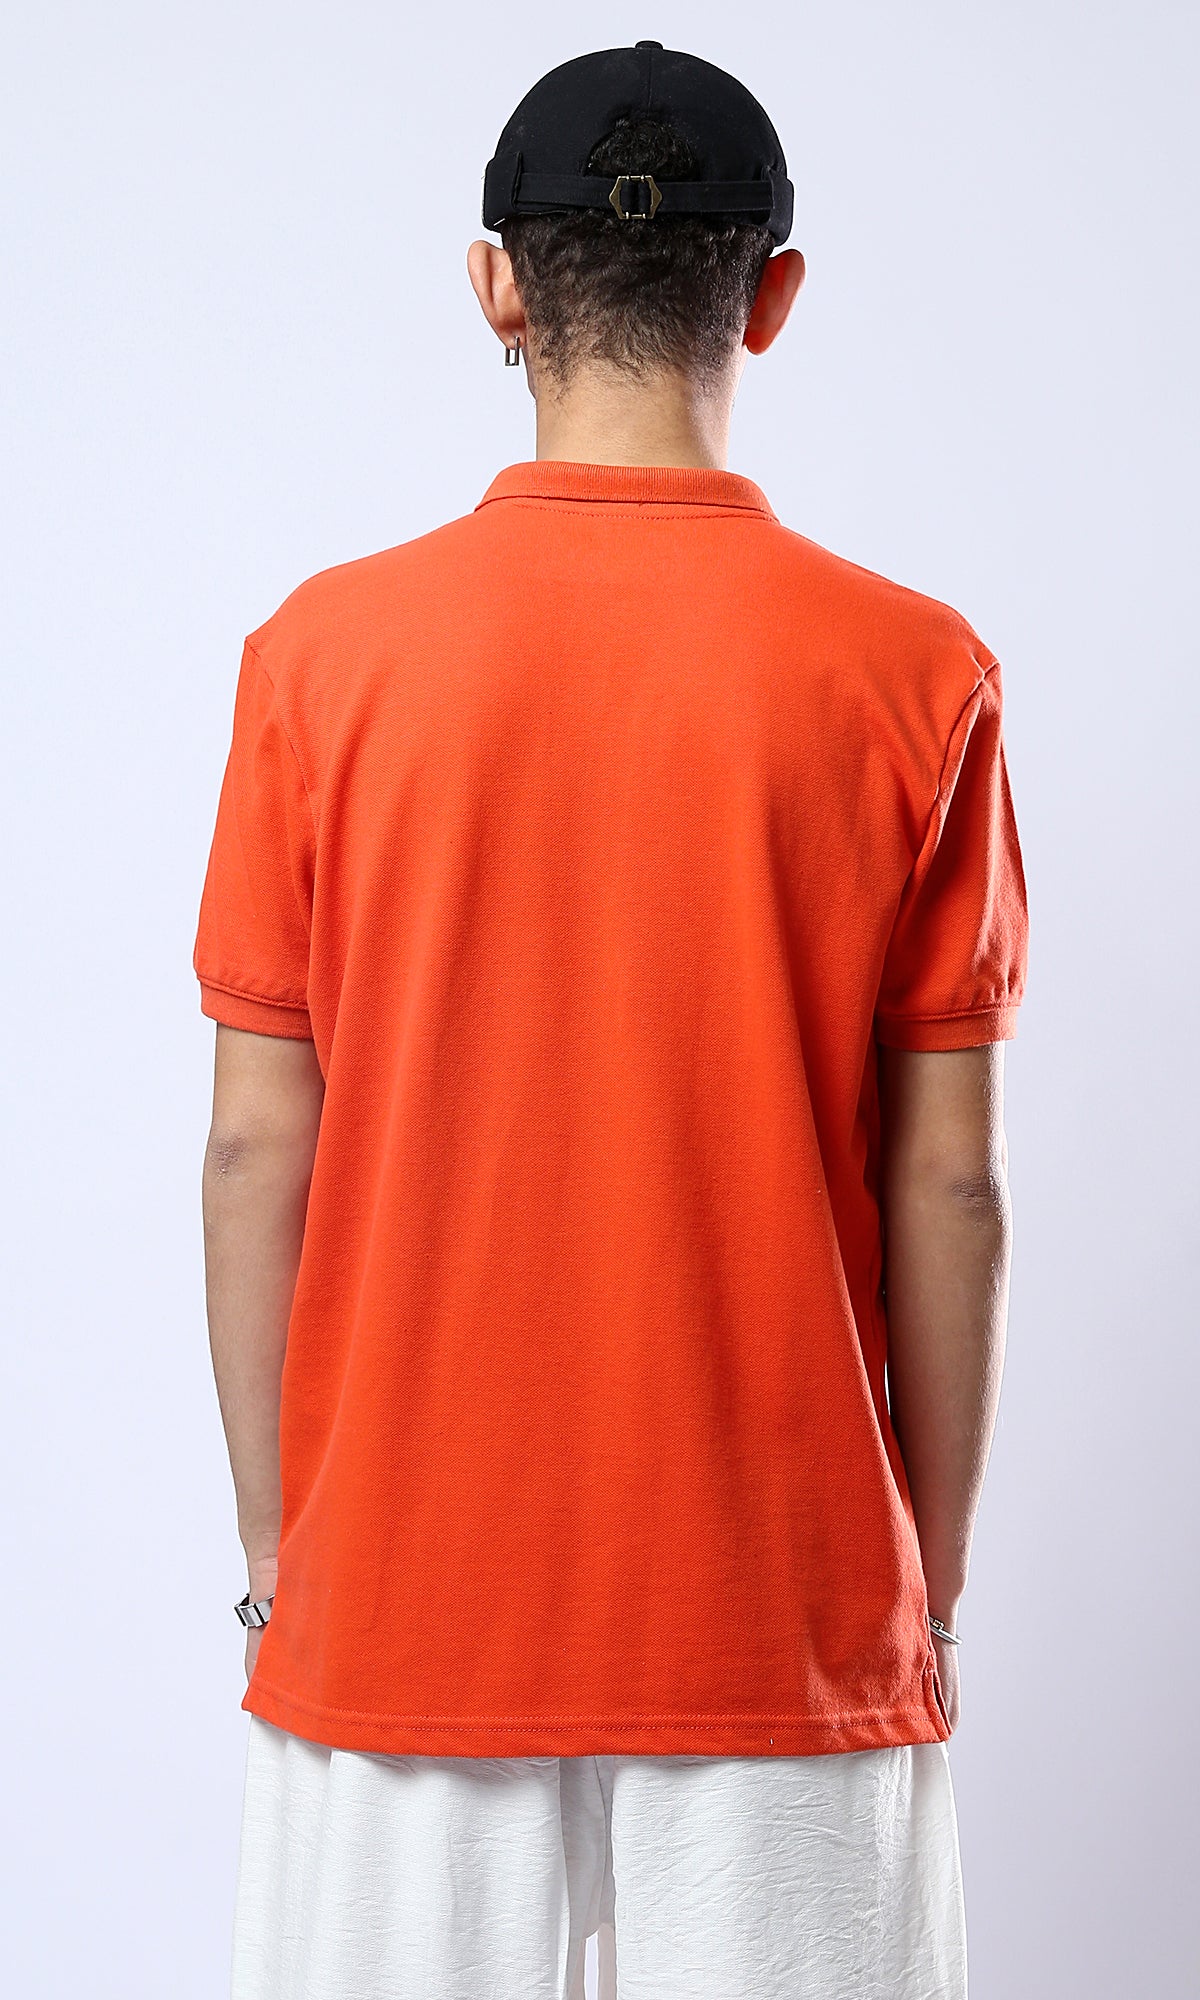 O178888 Hot Orange Solid Buttoned Polo Shirt